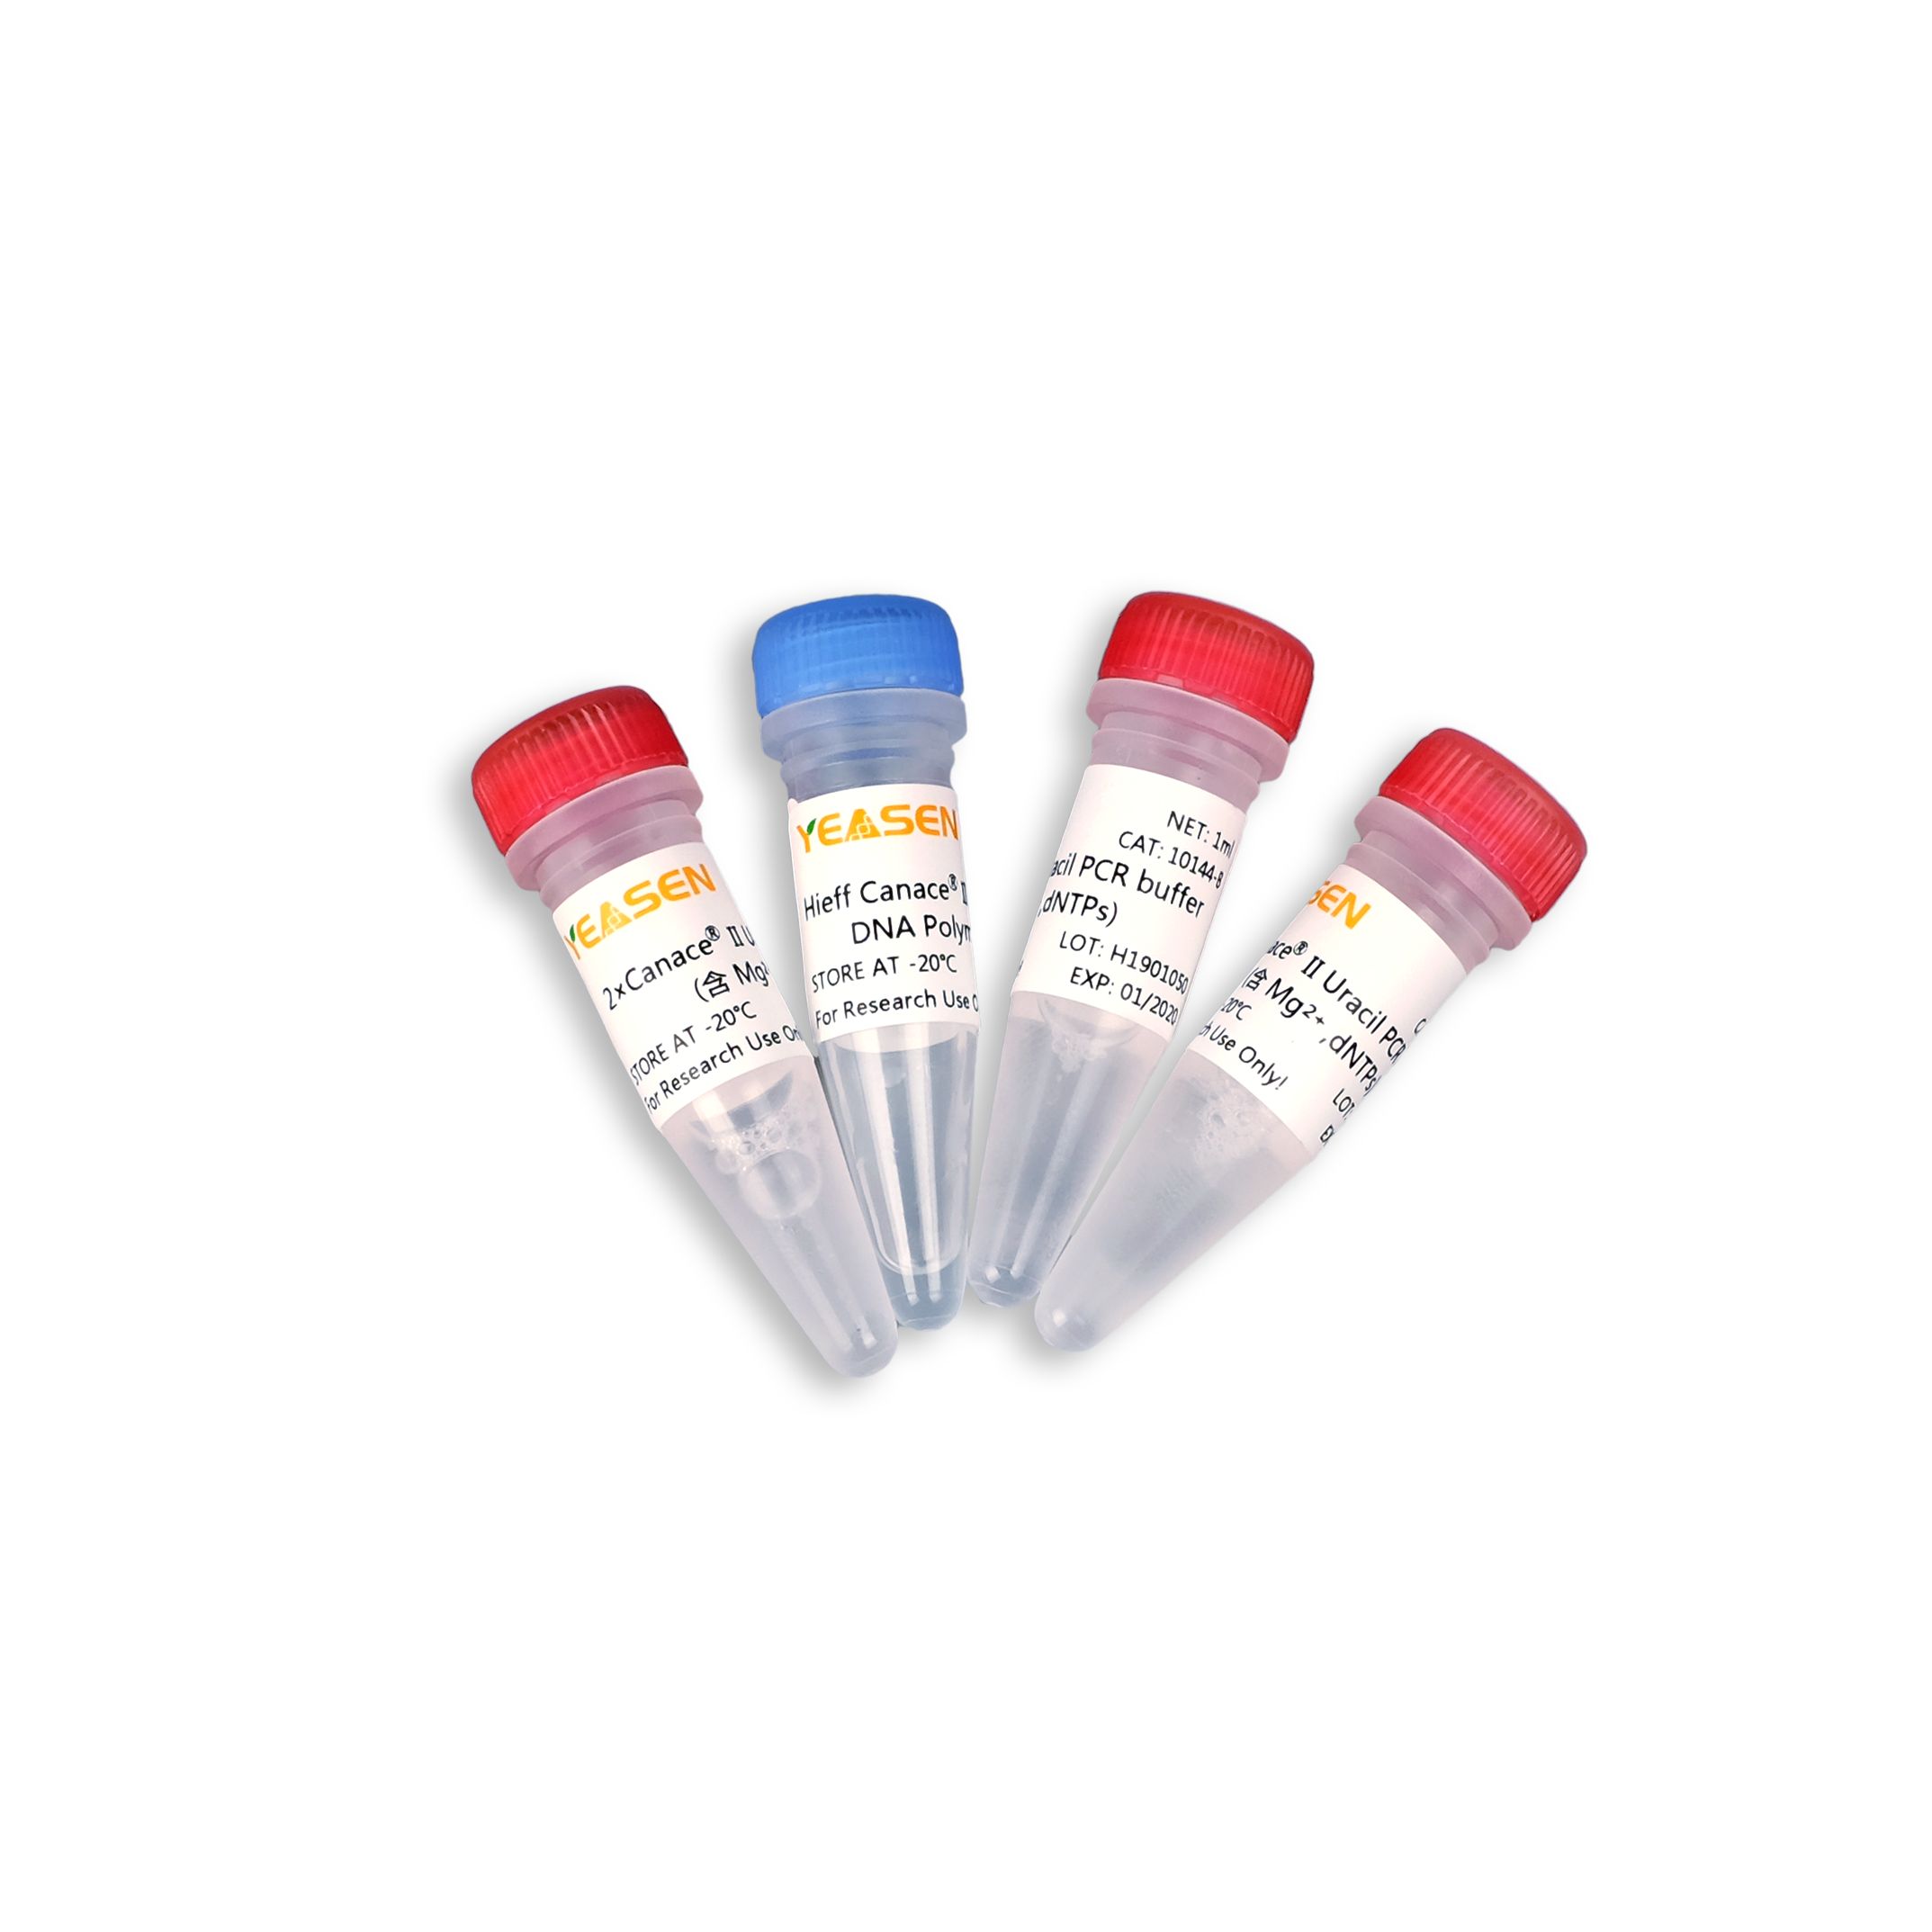 Hieff Canace® II Uracil High-Fidelity DNA Polymerase 高保真DNA聚合酶